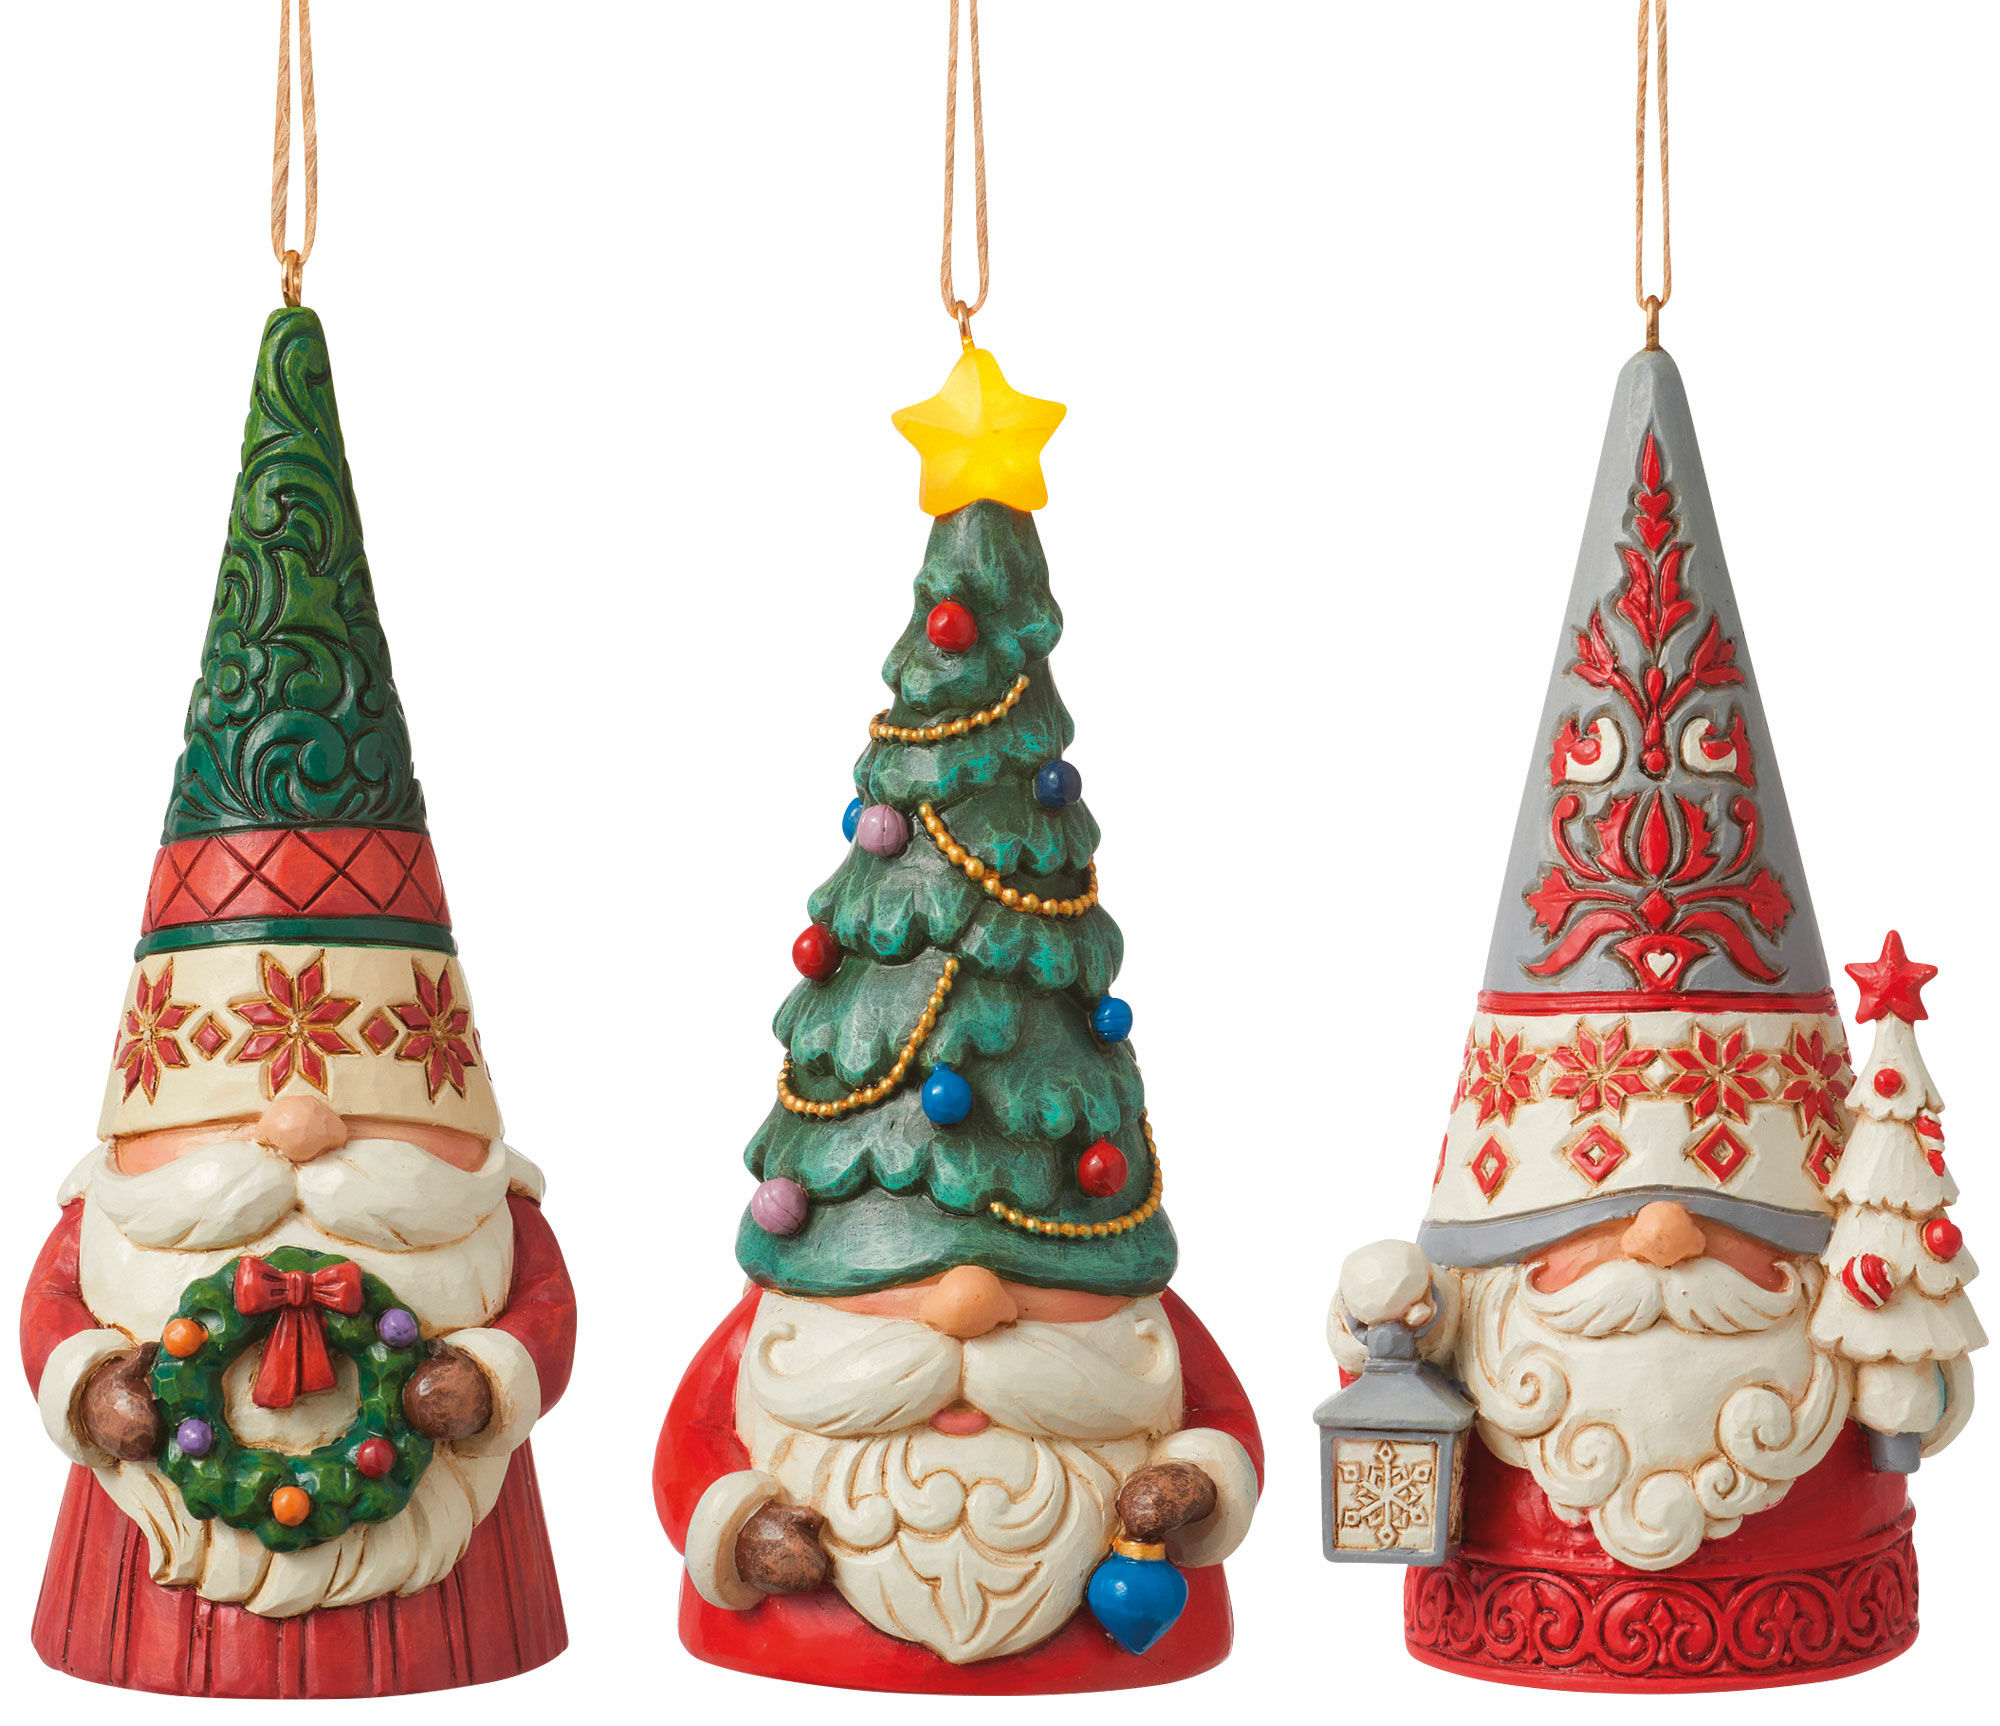 "Christmas Goblin Tree Ornament", set of 3 by Jim Shore